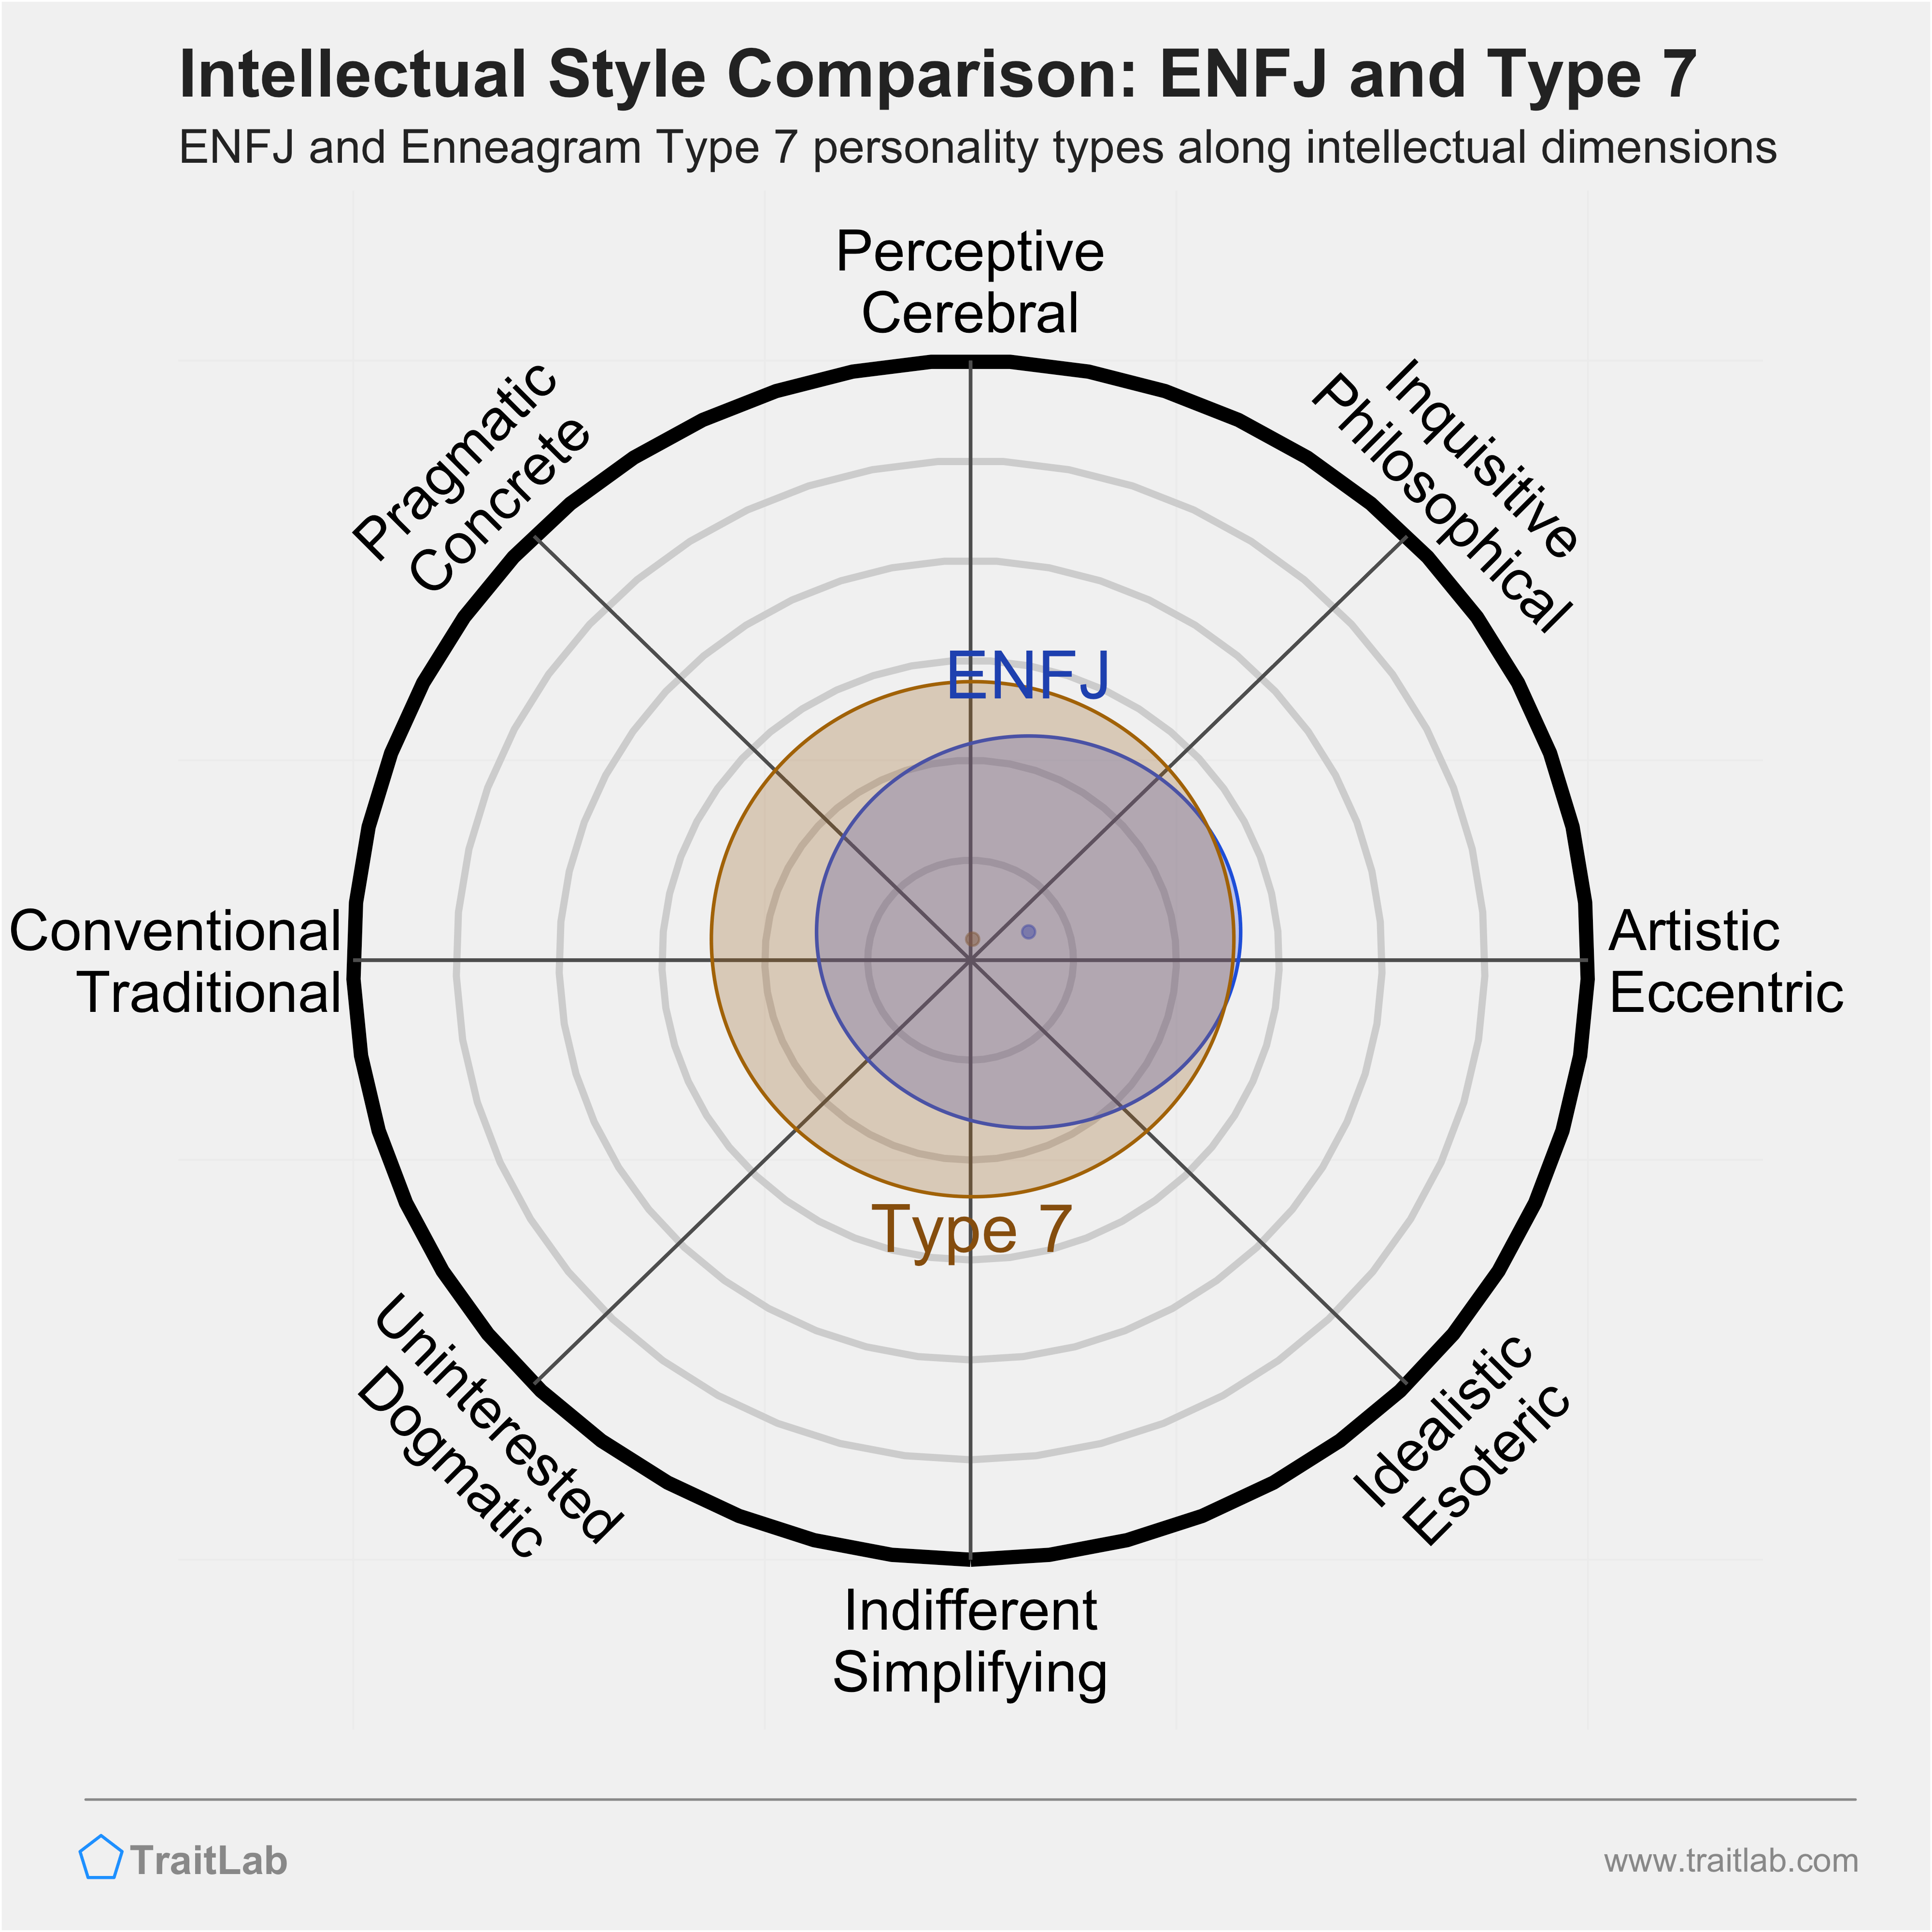 ENFJ and Type 7 comparison across intellectual dimensions